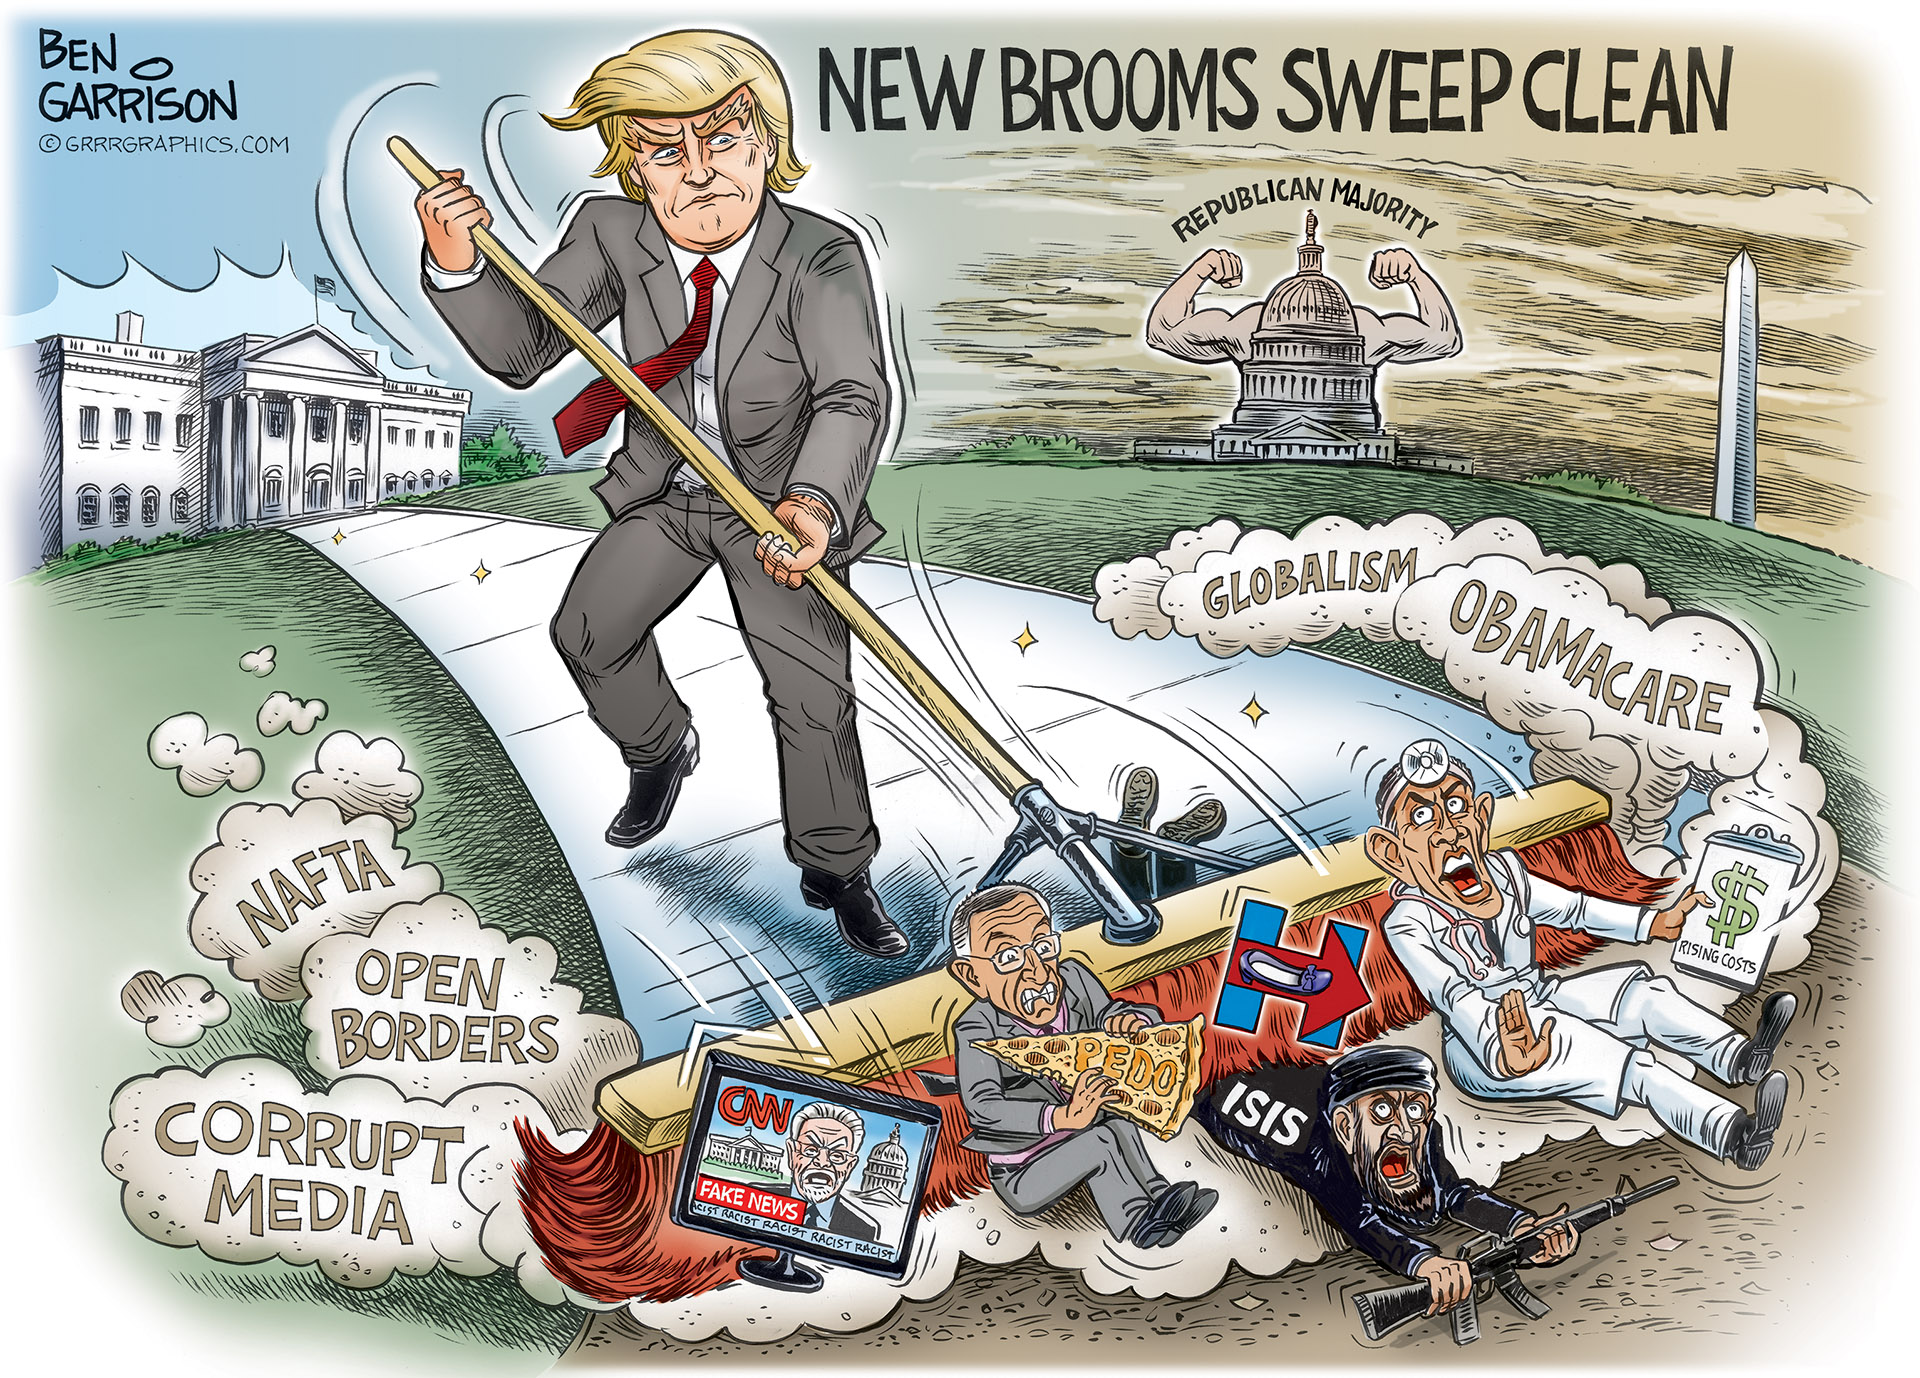 New Brooms Sweep Clean Ben Garrison Cartoon | GrrrGraphics on WordPress